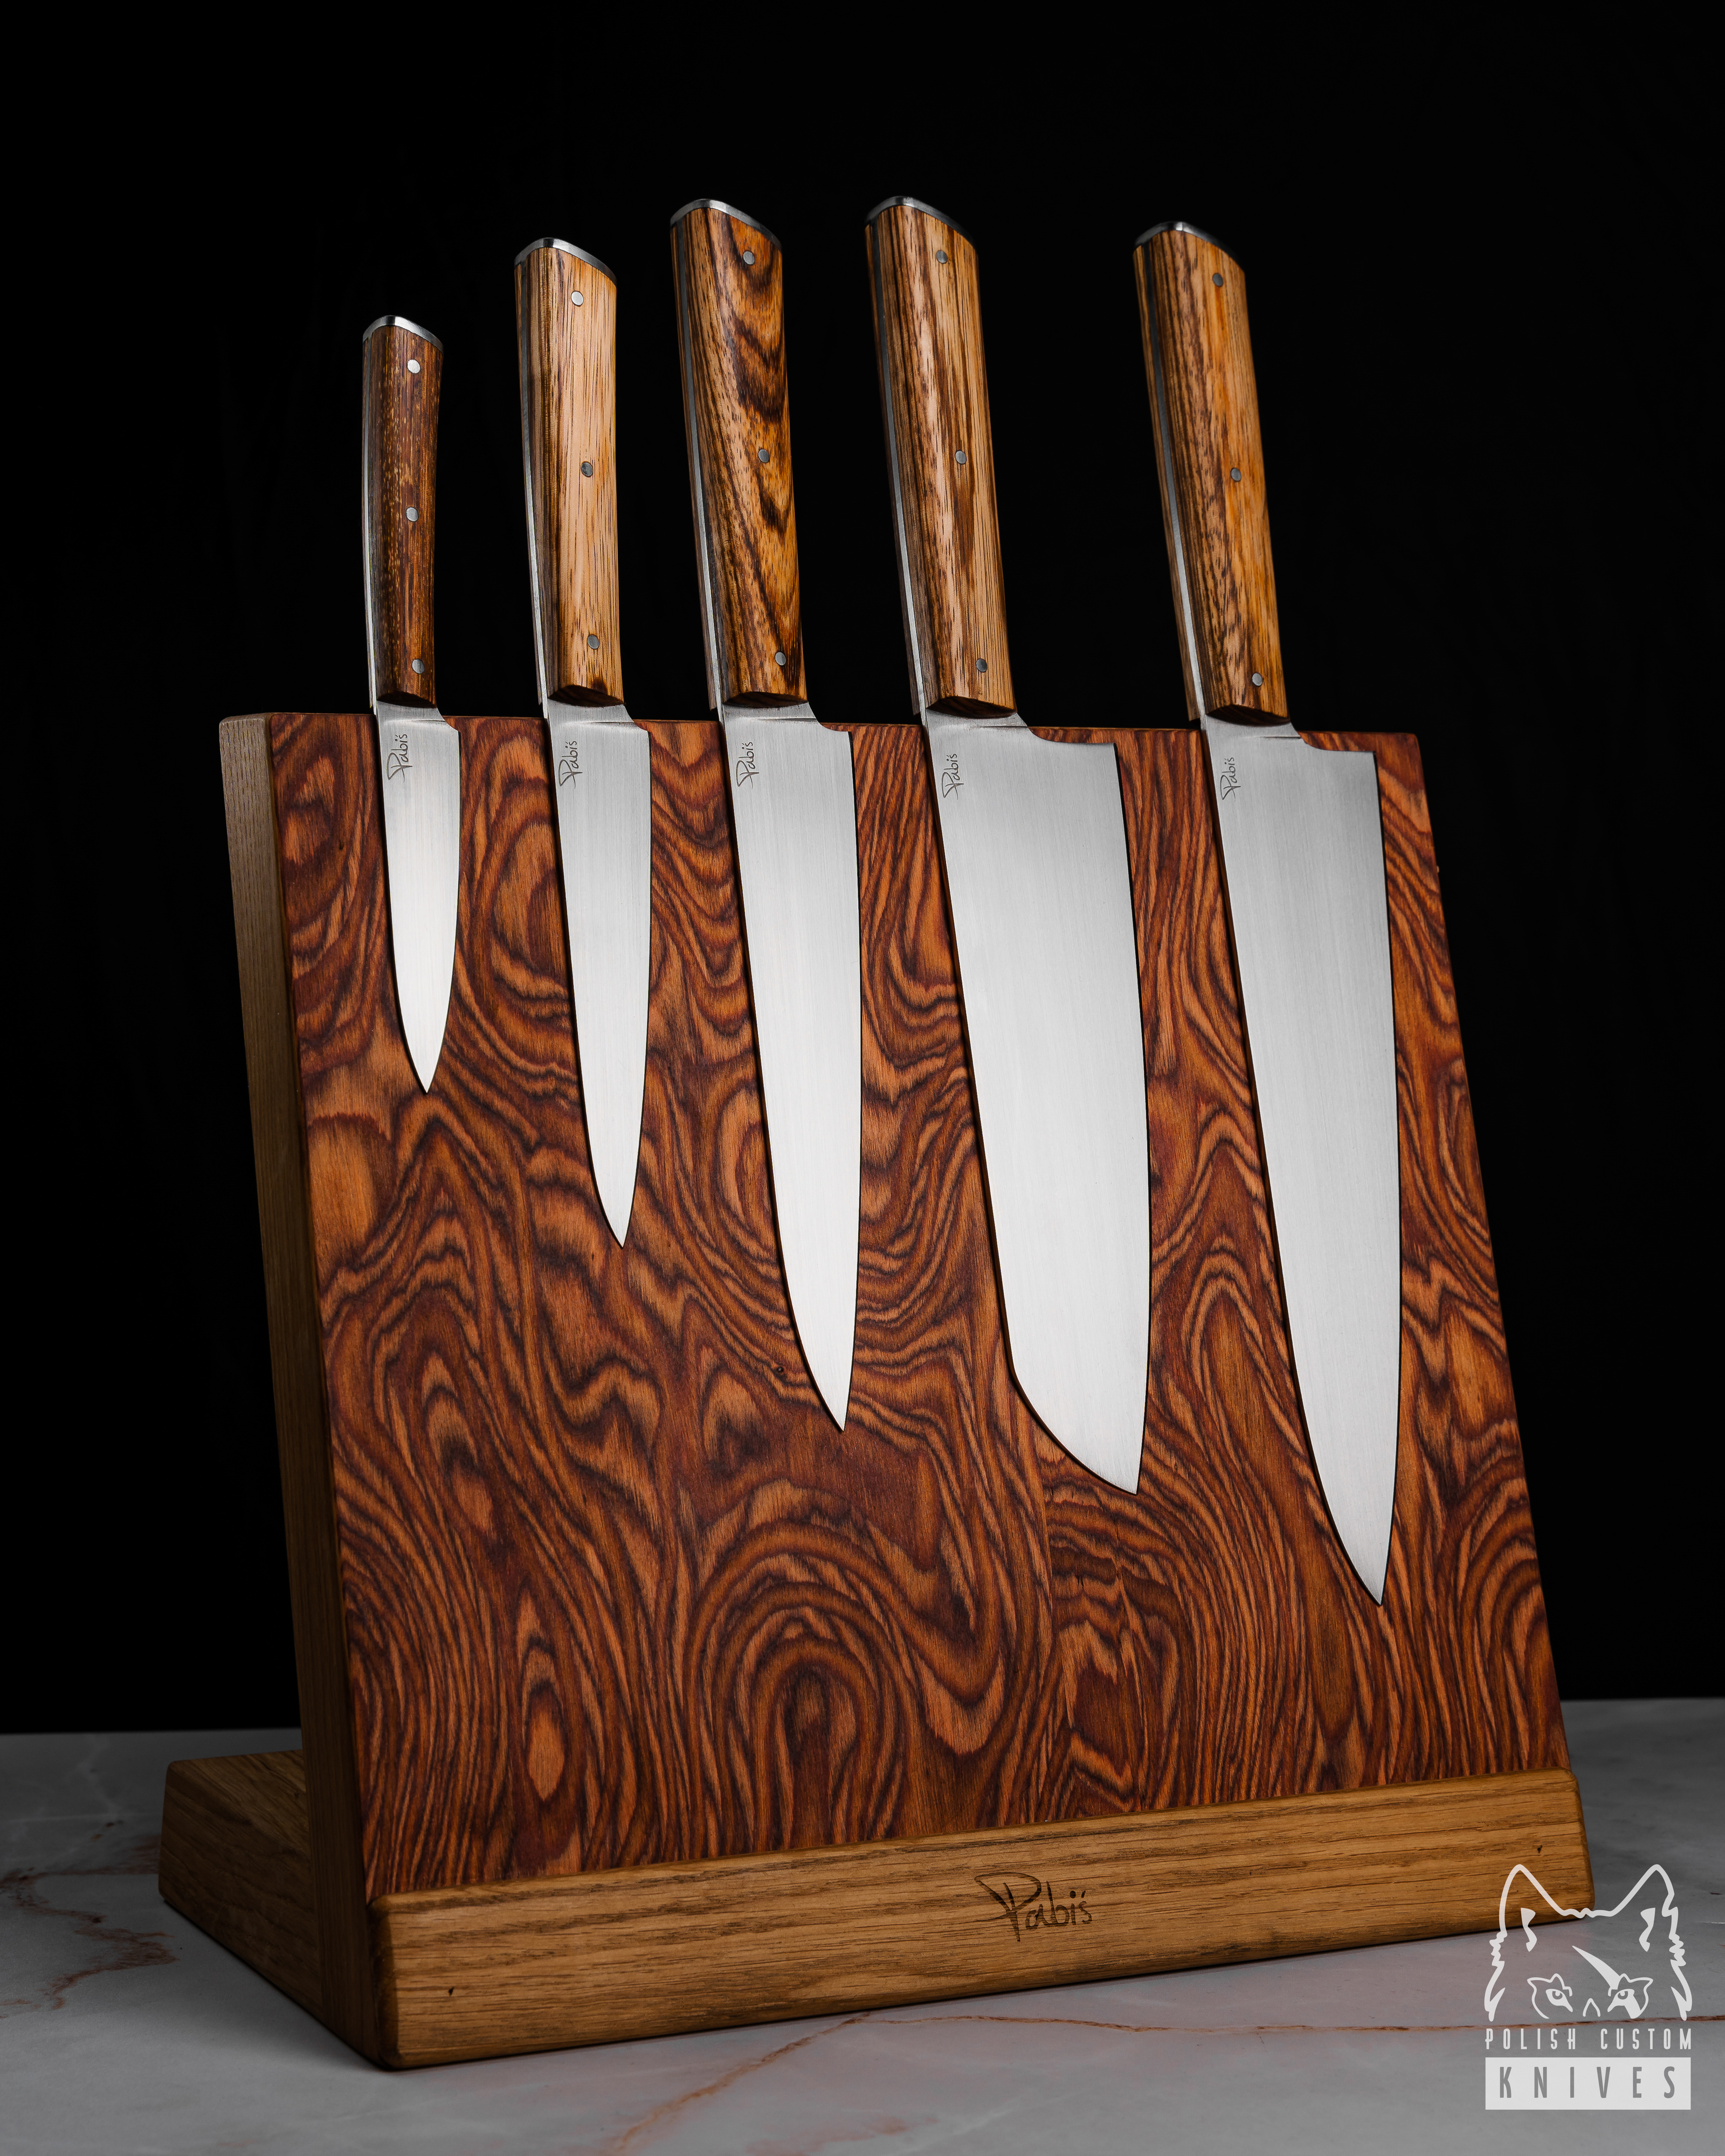 Buy KITCHEN SERRATED BREAD KNIFE 240 4 K110 BLACK HORNBEAM PABIS